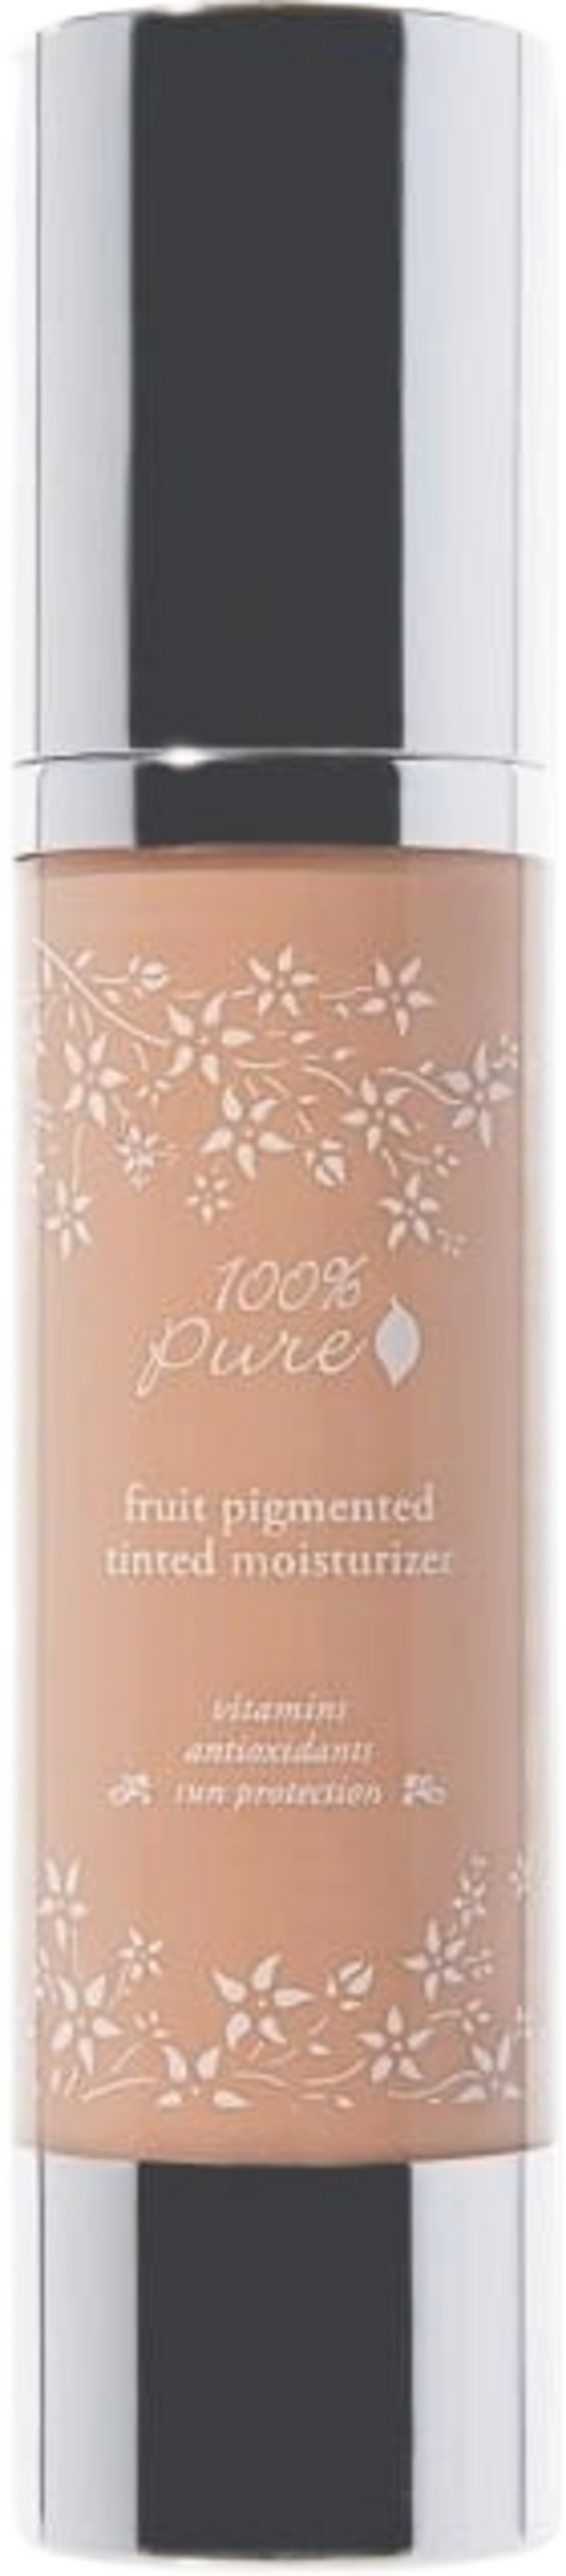 100% Pure Fruit Pigmented Tinted Moisturizer - Golden Peach (deep medium)